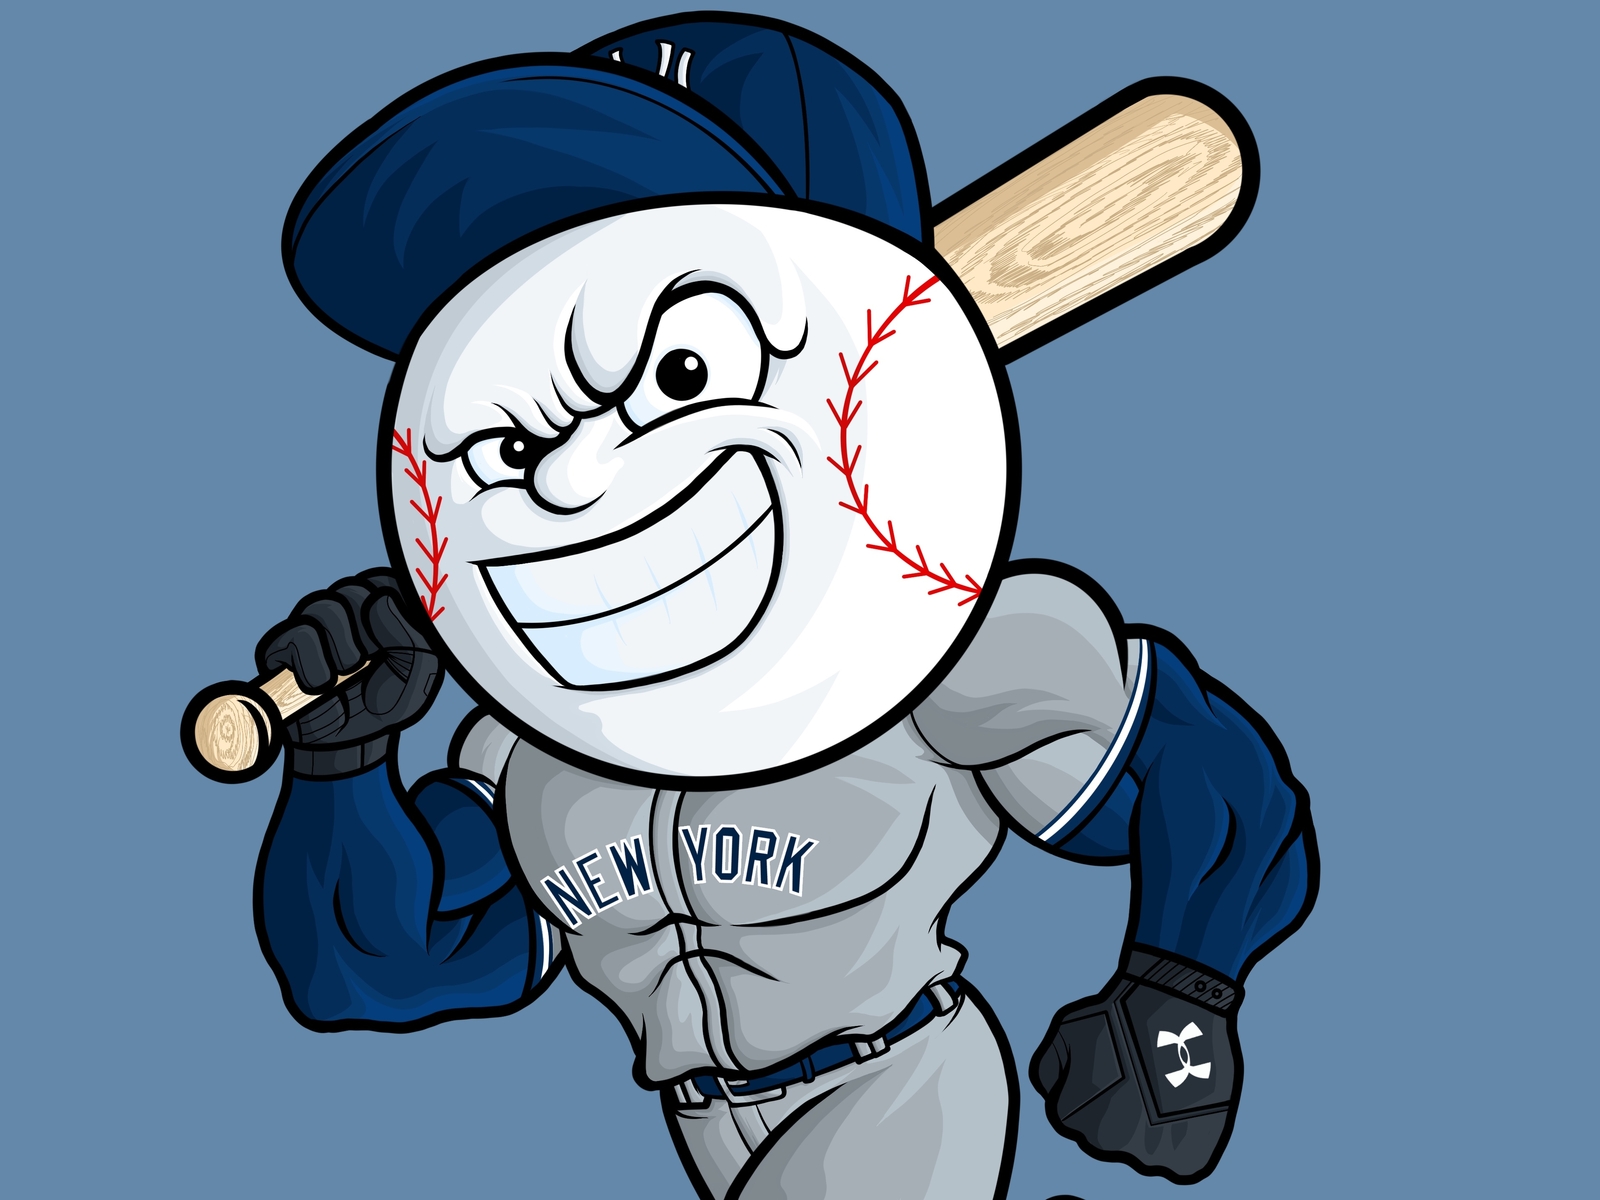 MLB Yankee Slugger x Under Armour by Roberto Orozco on Dribbble